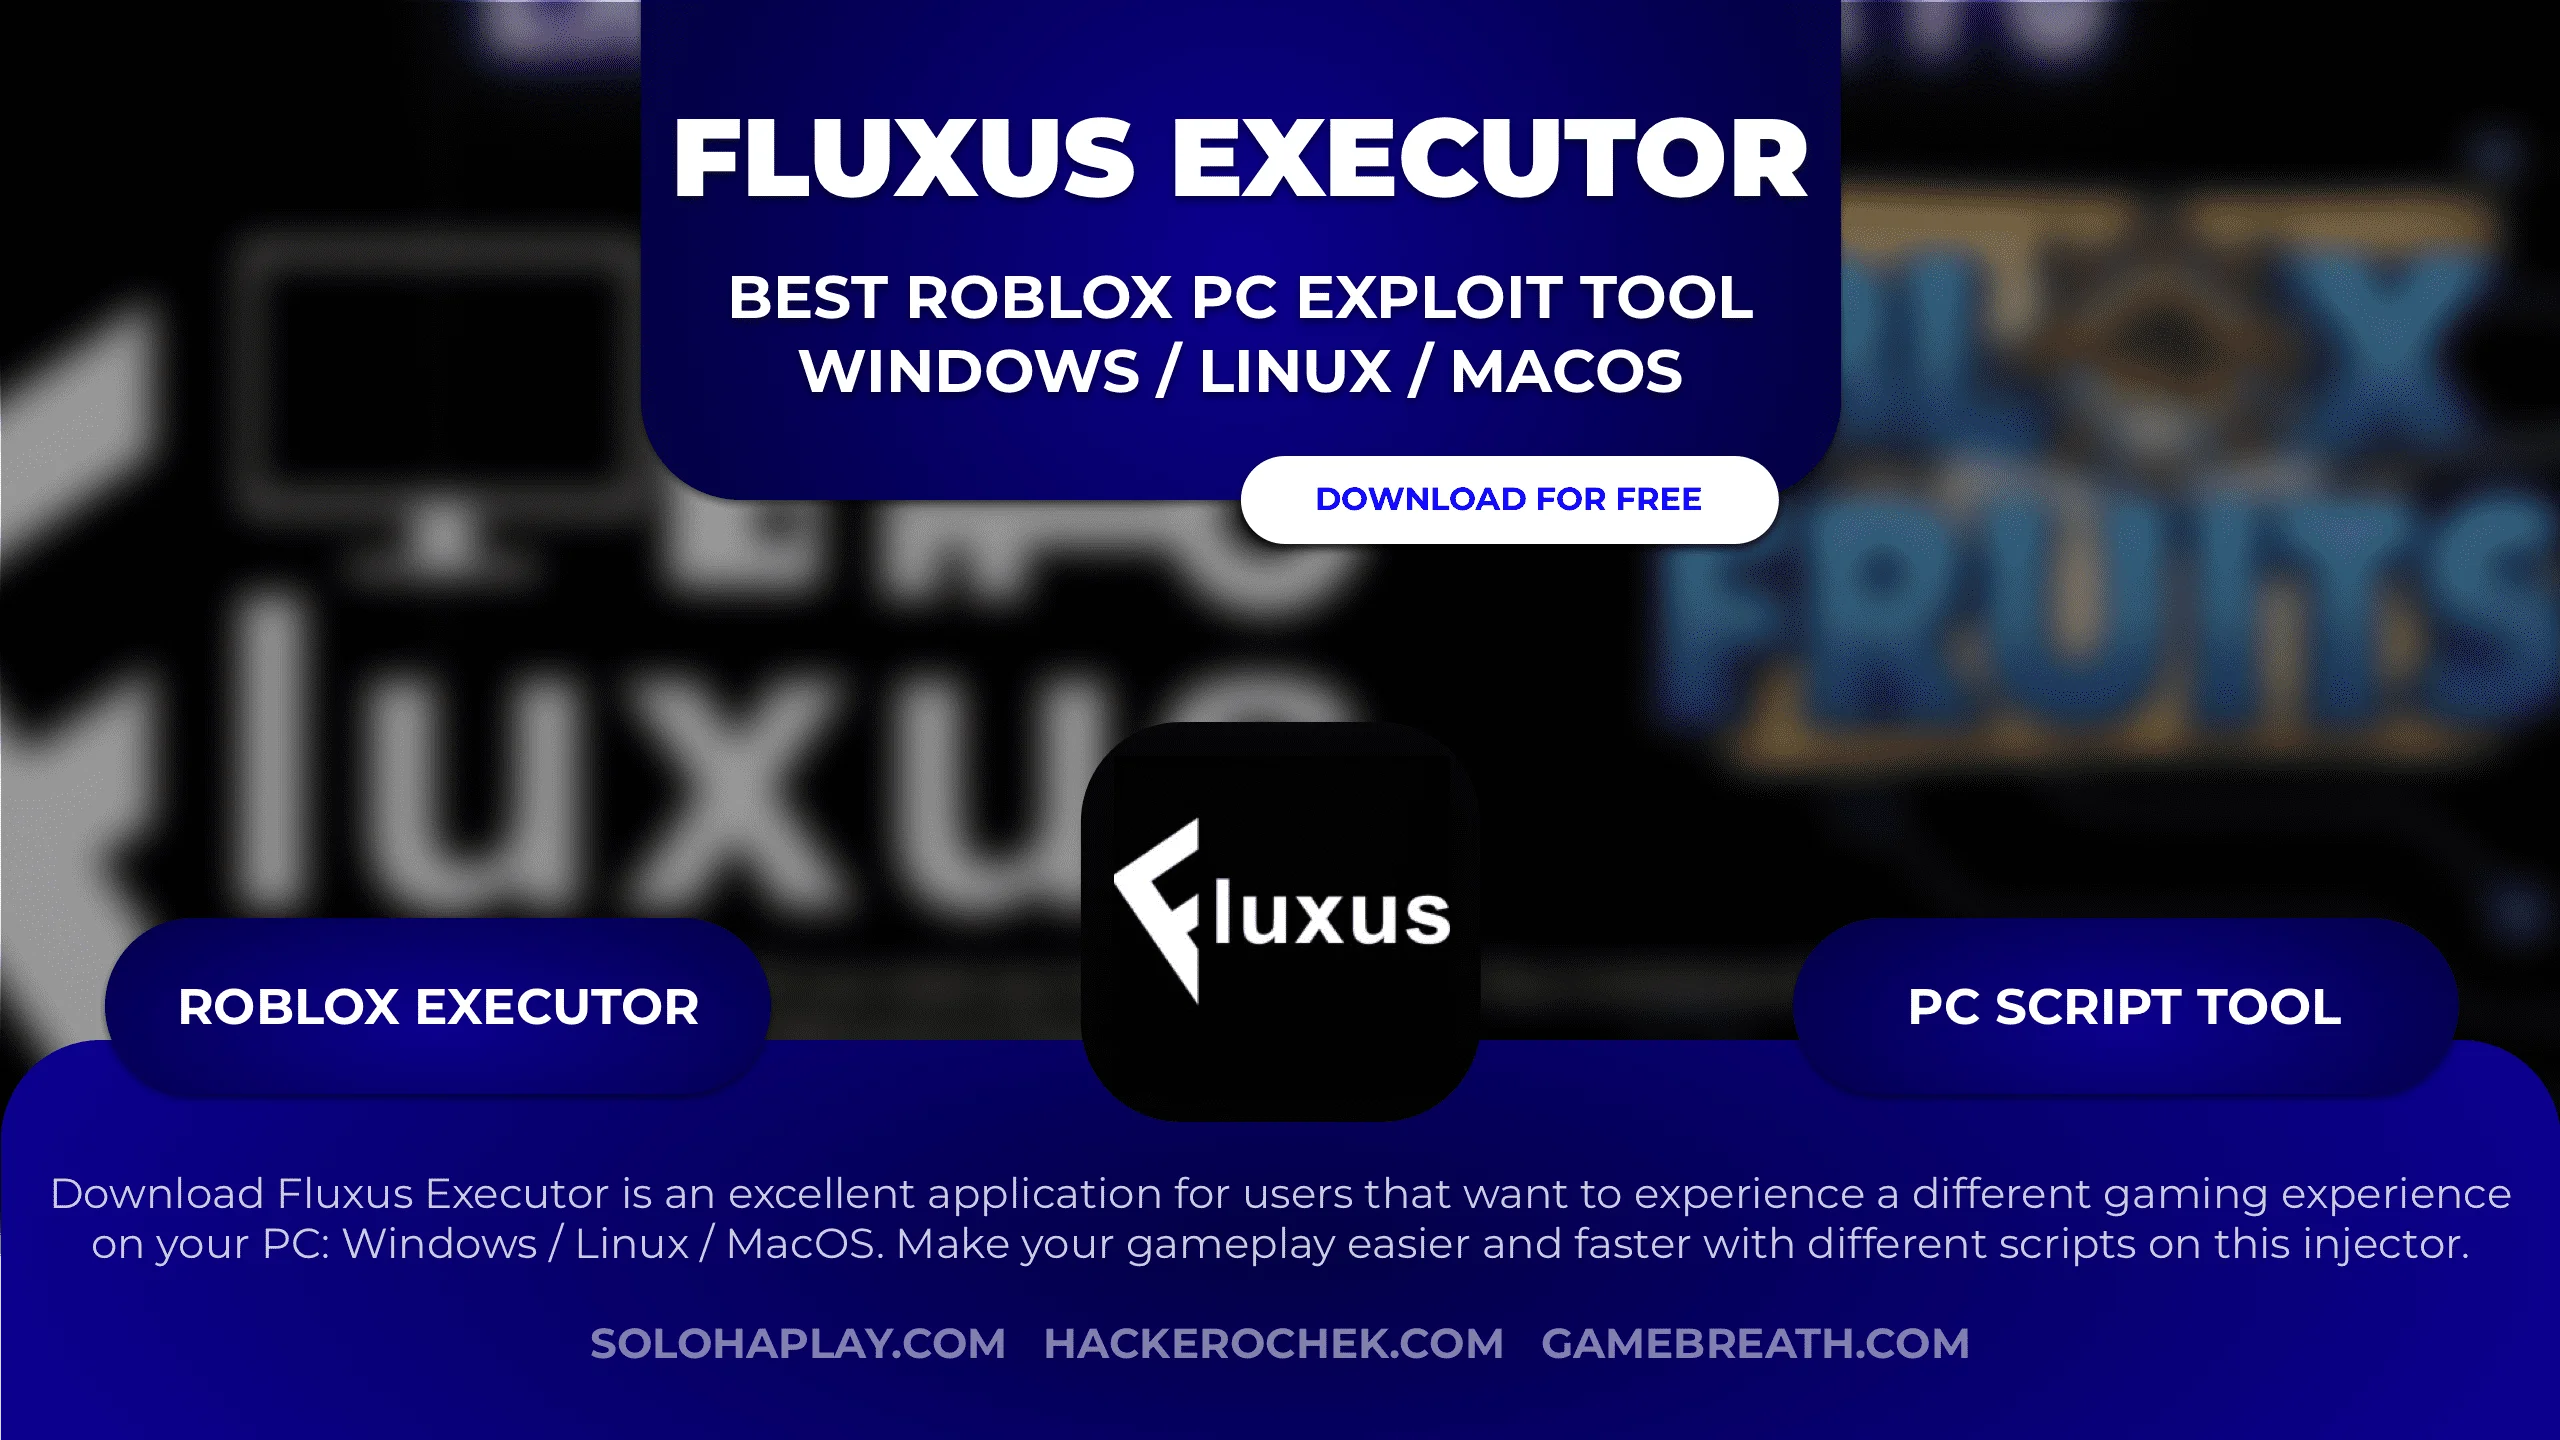 How To Download Fluxus Executor Roblox 